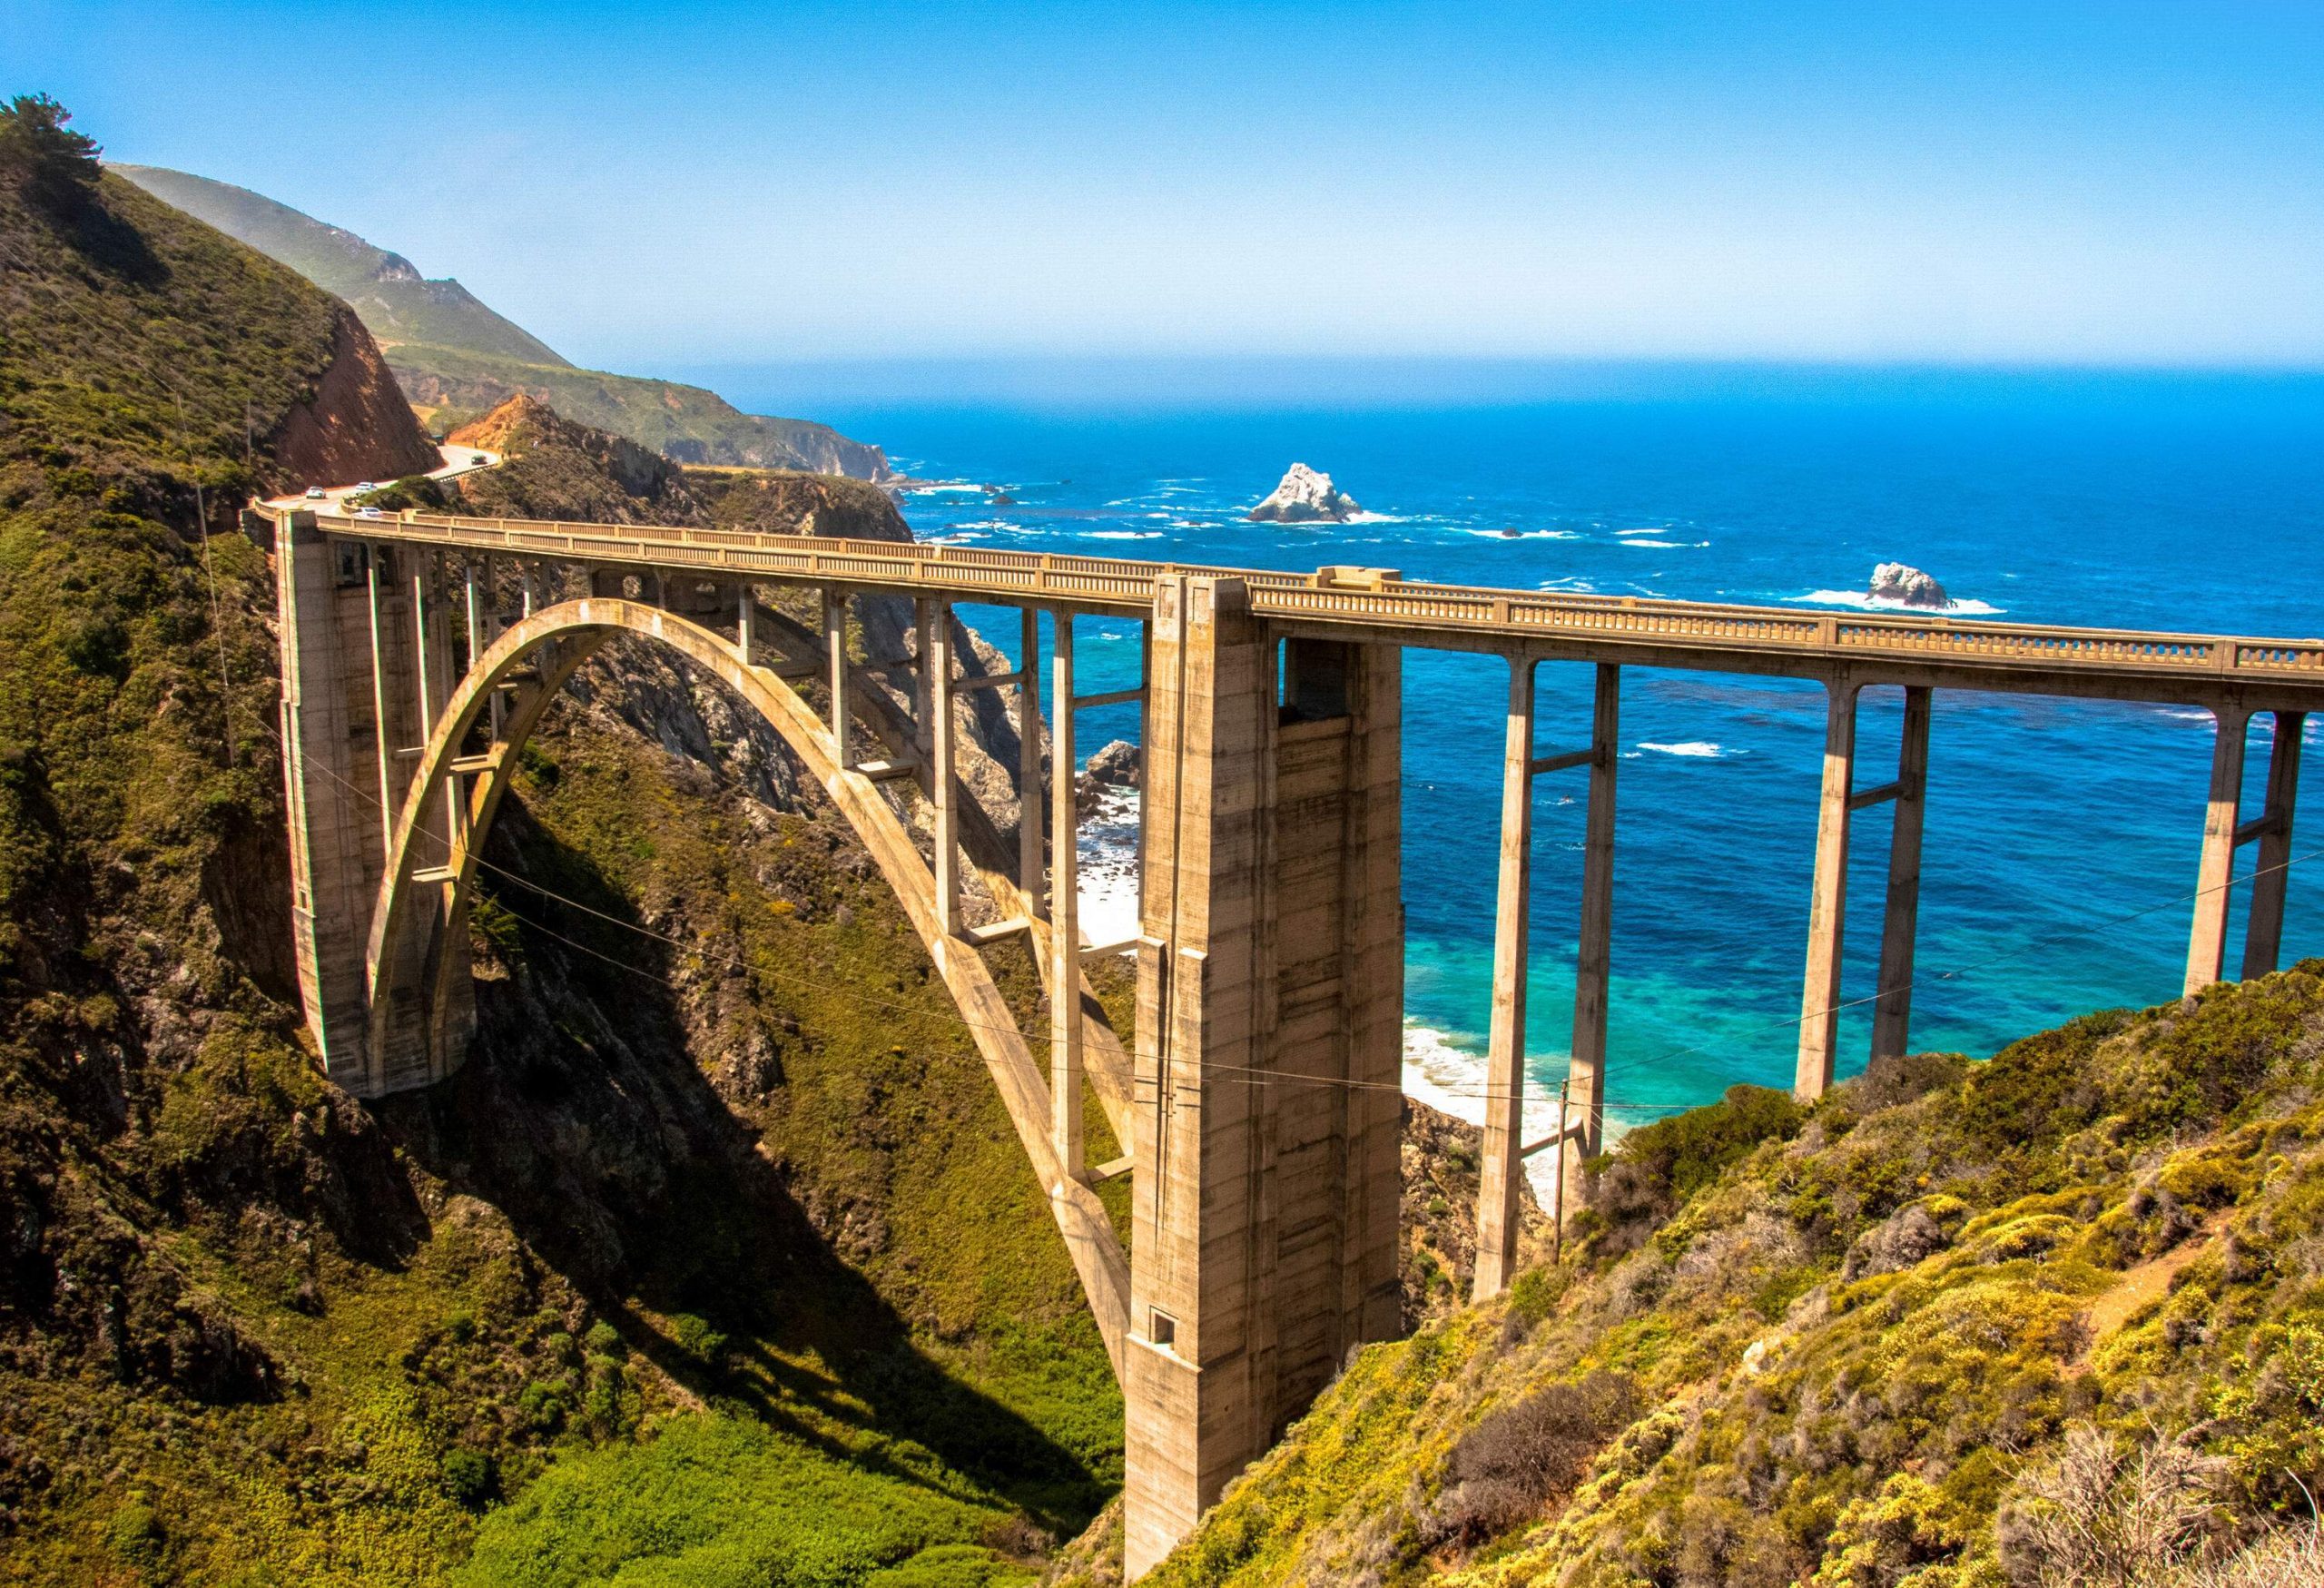 A tall arch bridge across a ravine between two cliffs overlooking the ocean.